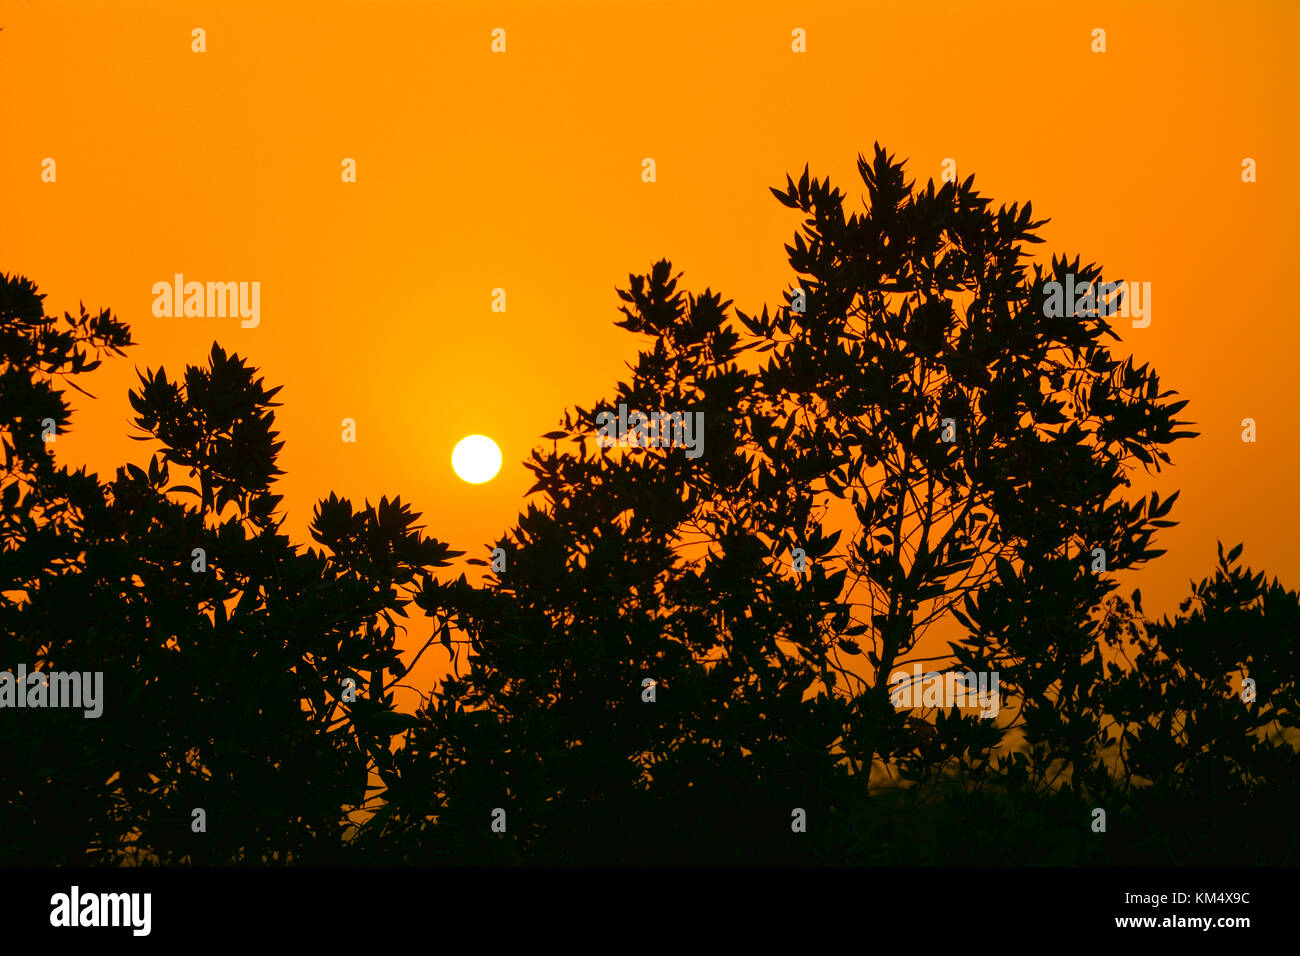 Sunrises in Saudi arabia with orange sky and silhouette trees Stock Photo